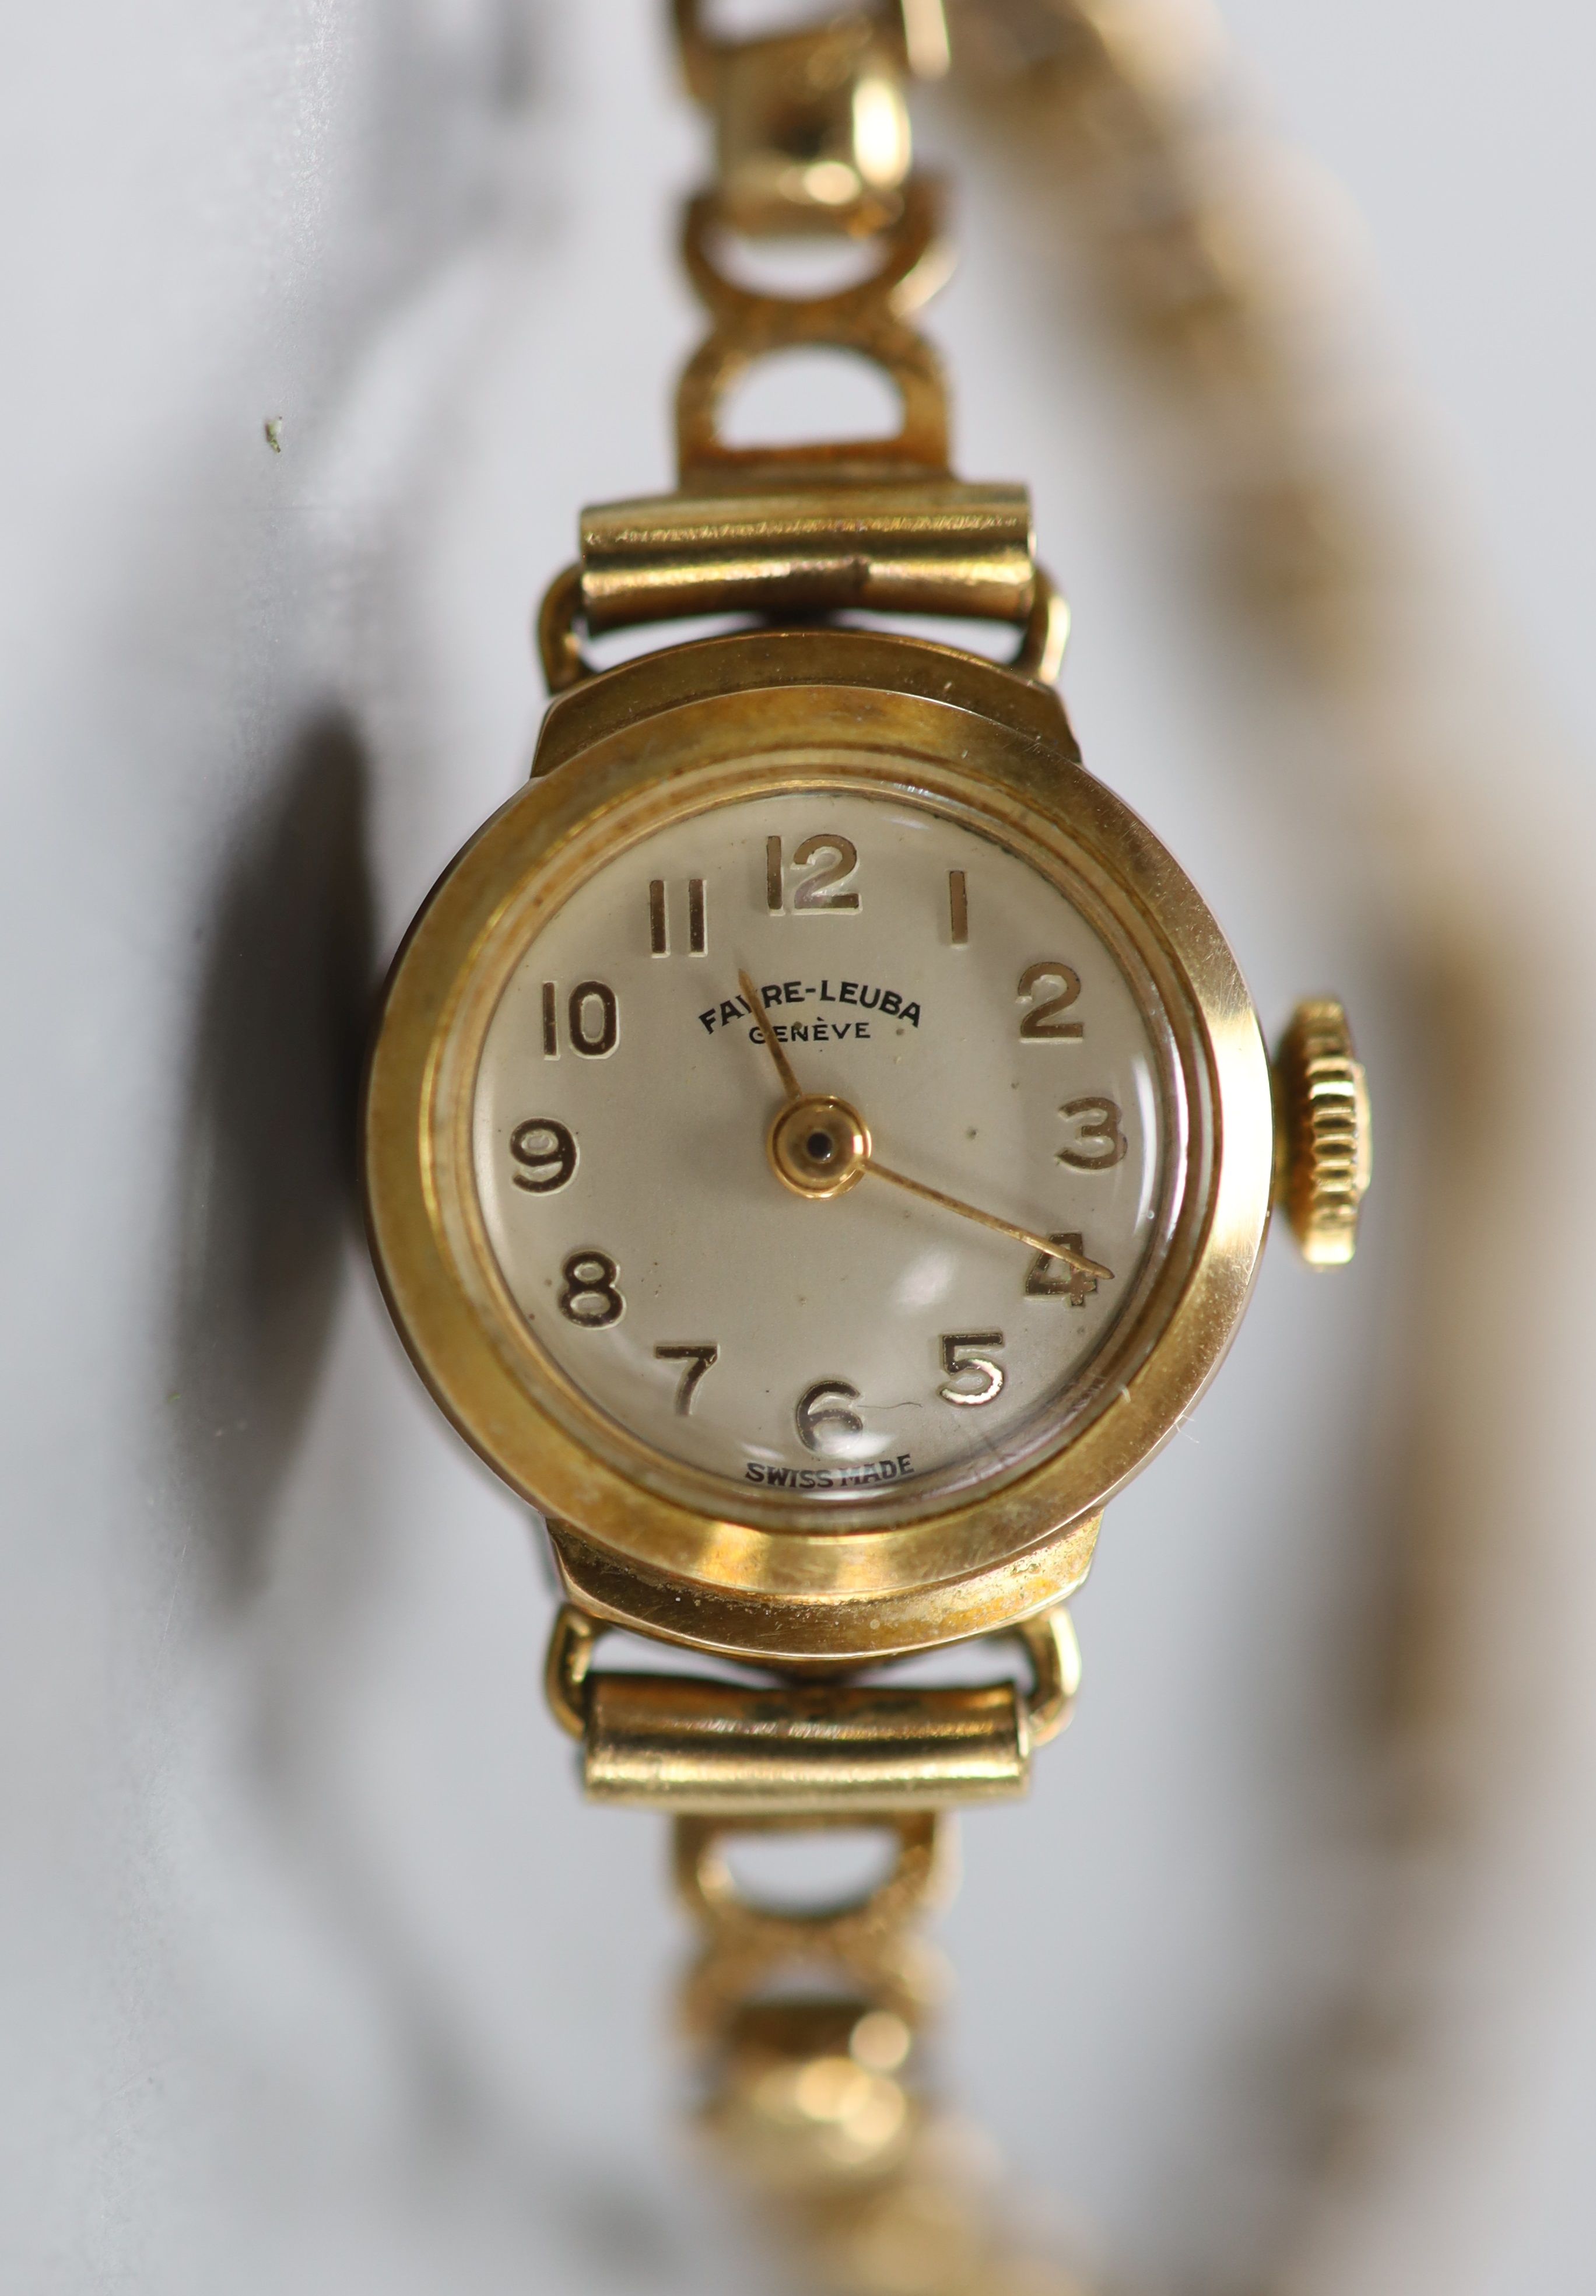 A lady's 9ct god Favre Leuba manual wind wrist watch, on a 9ct gold bracelet